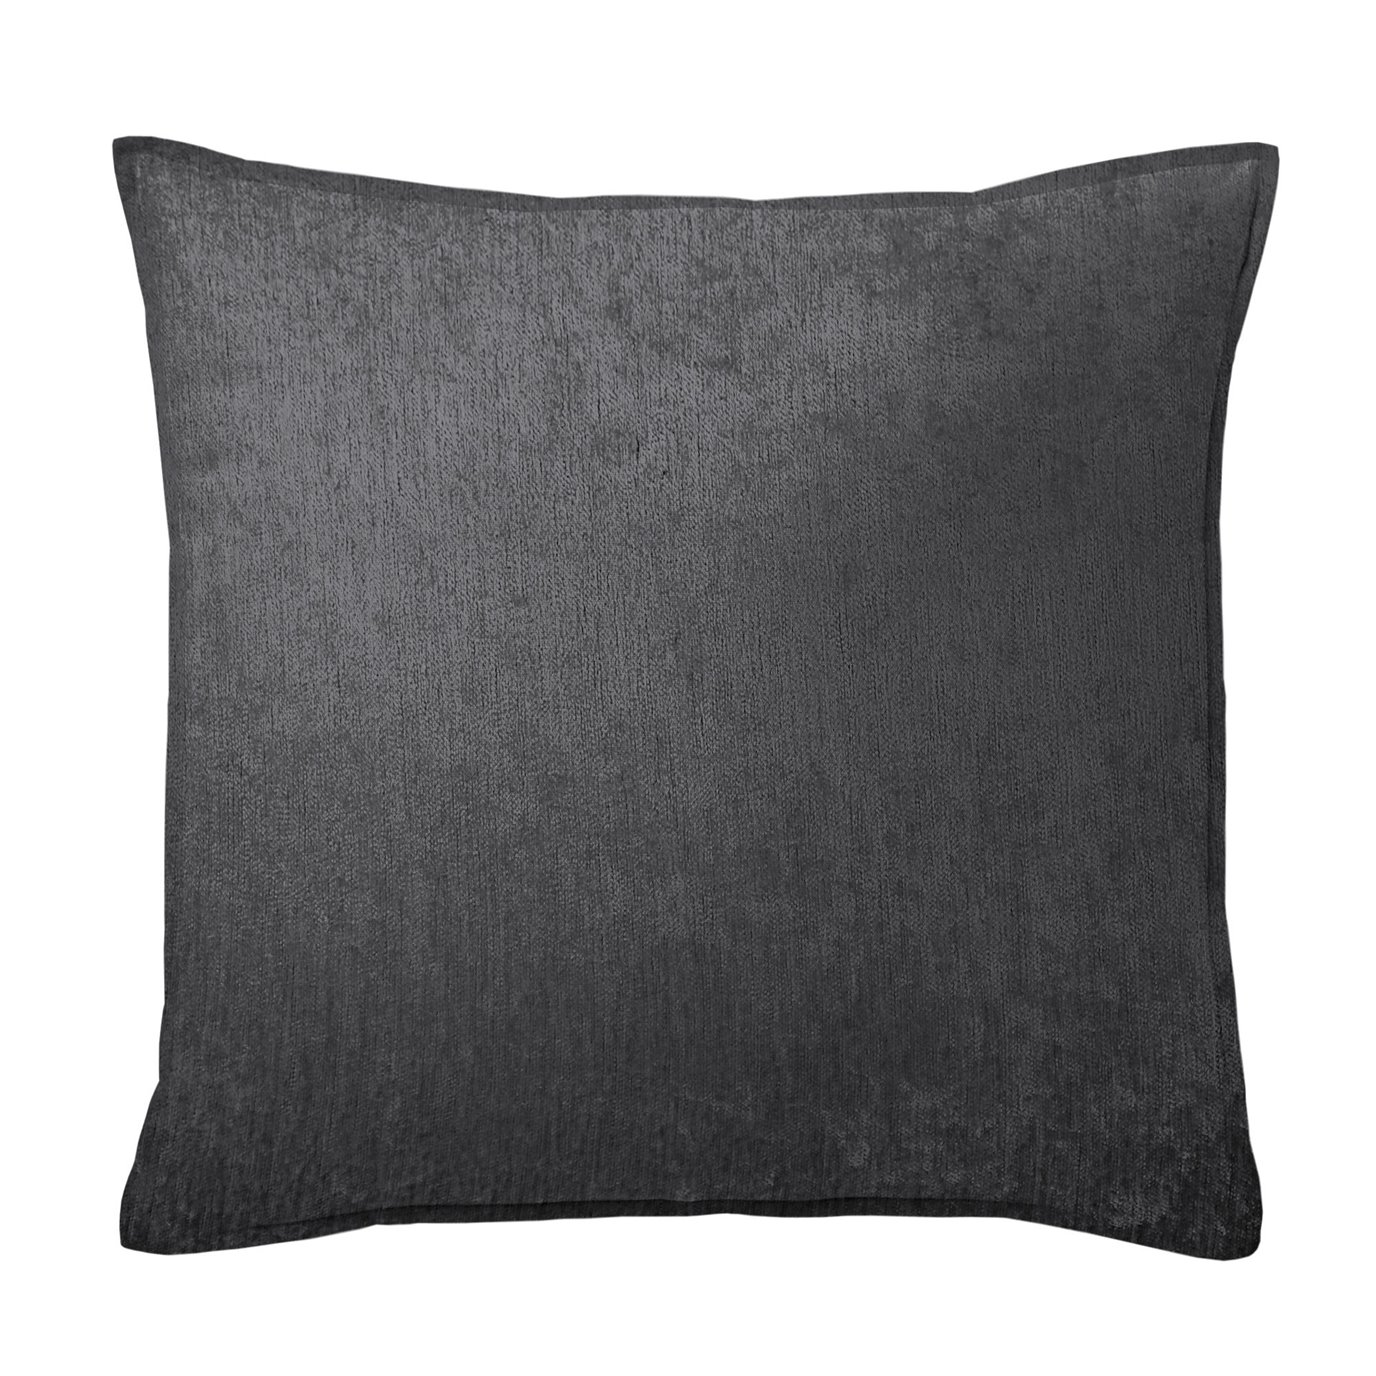 Juno Velvet Gray Decorative Pillow - Size 20" Square